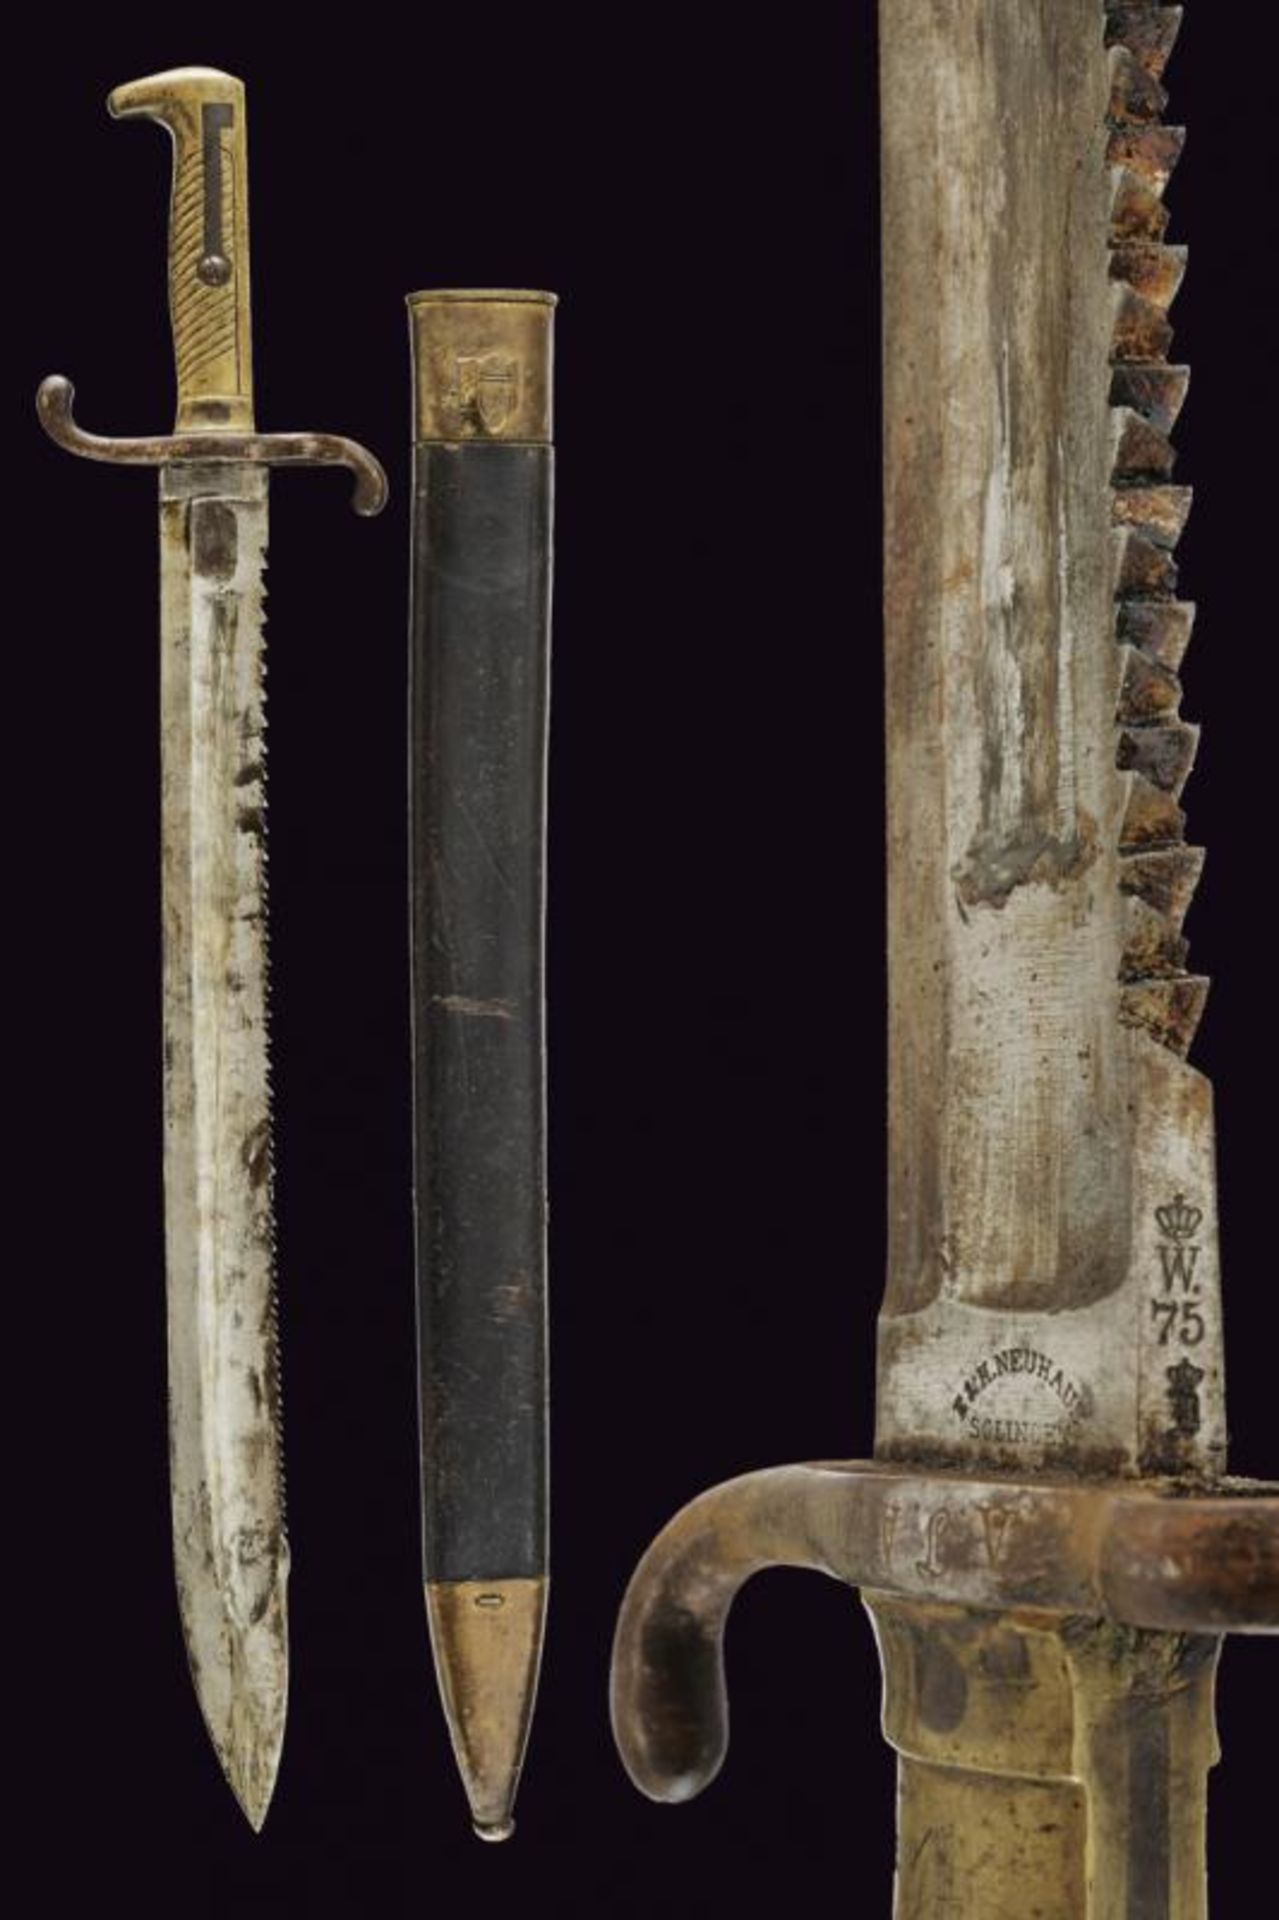 A rare 1871 model saw back bayonet